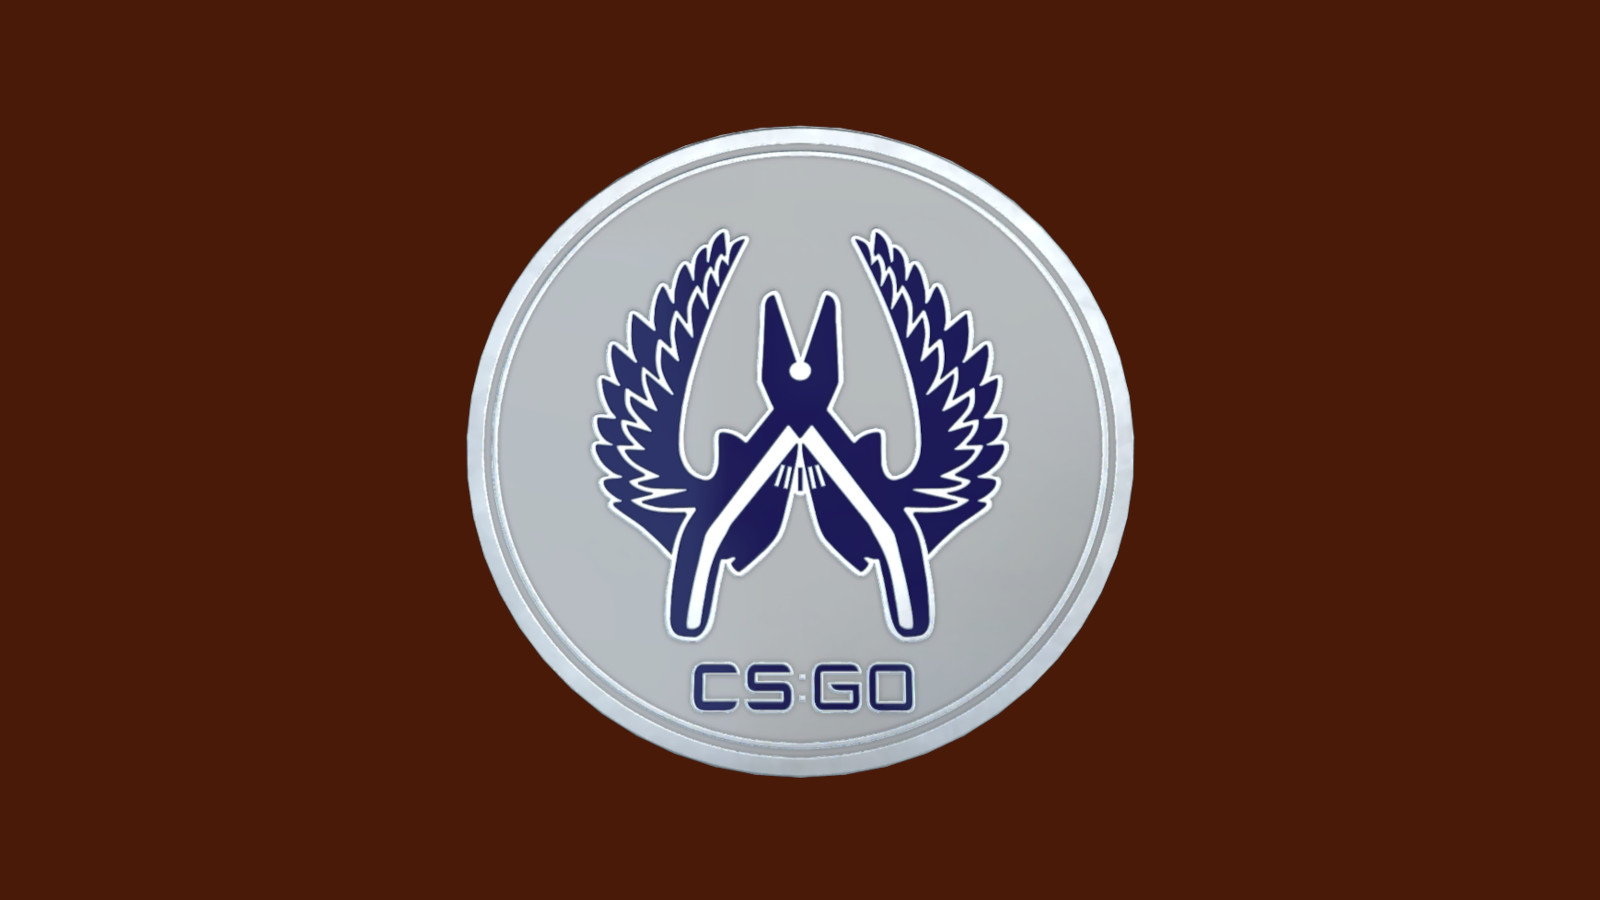 CS:GO - Series 3 - Guardian 3 Collectible Pin [$ 225.98]